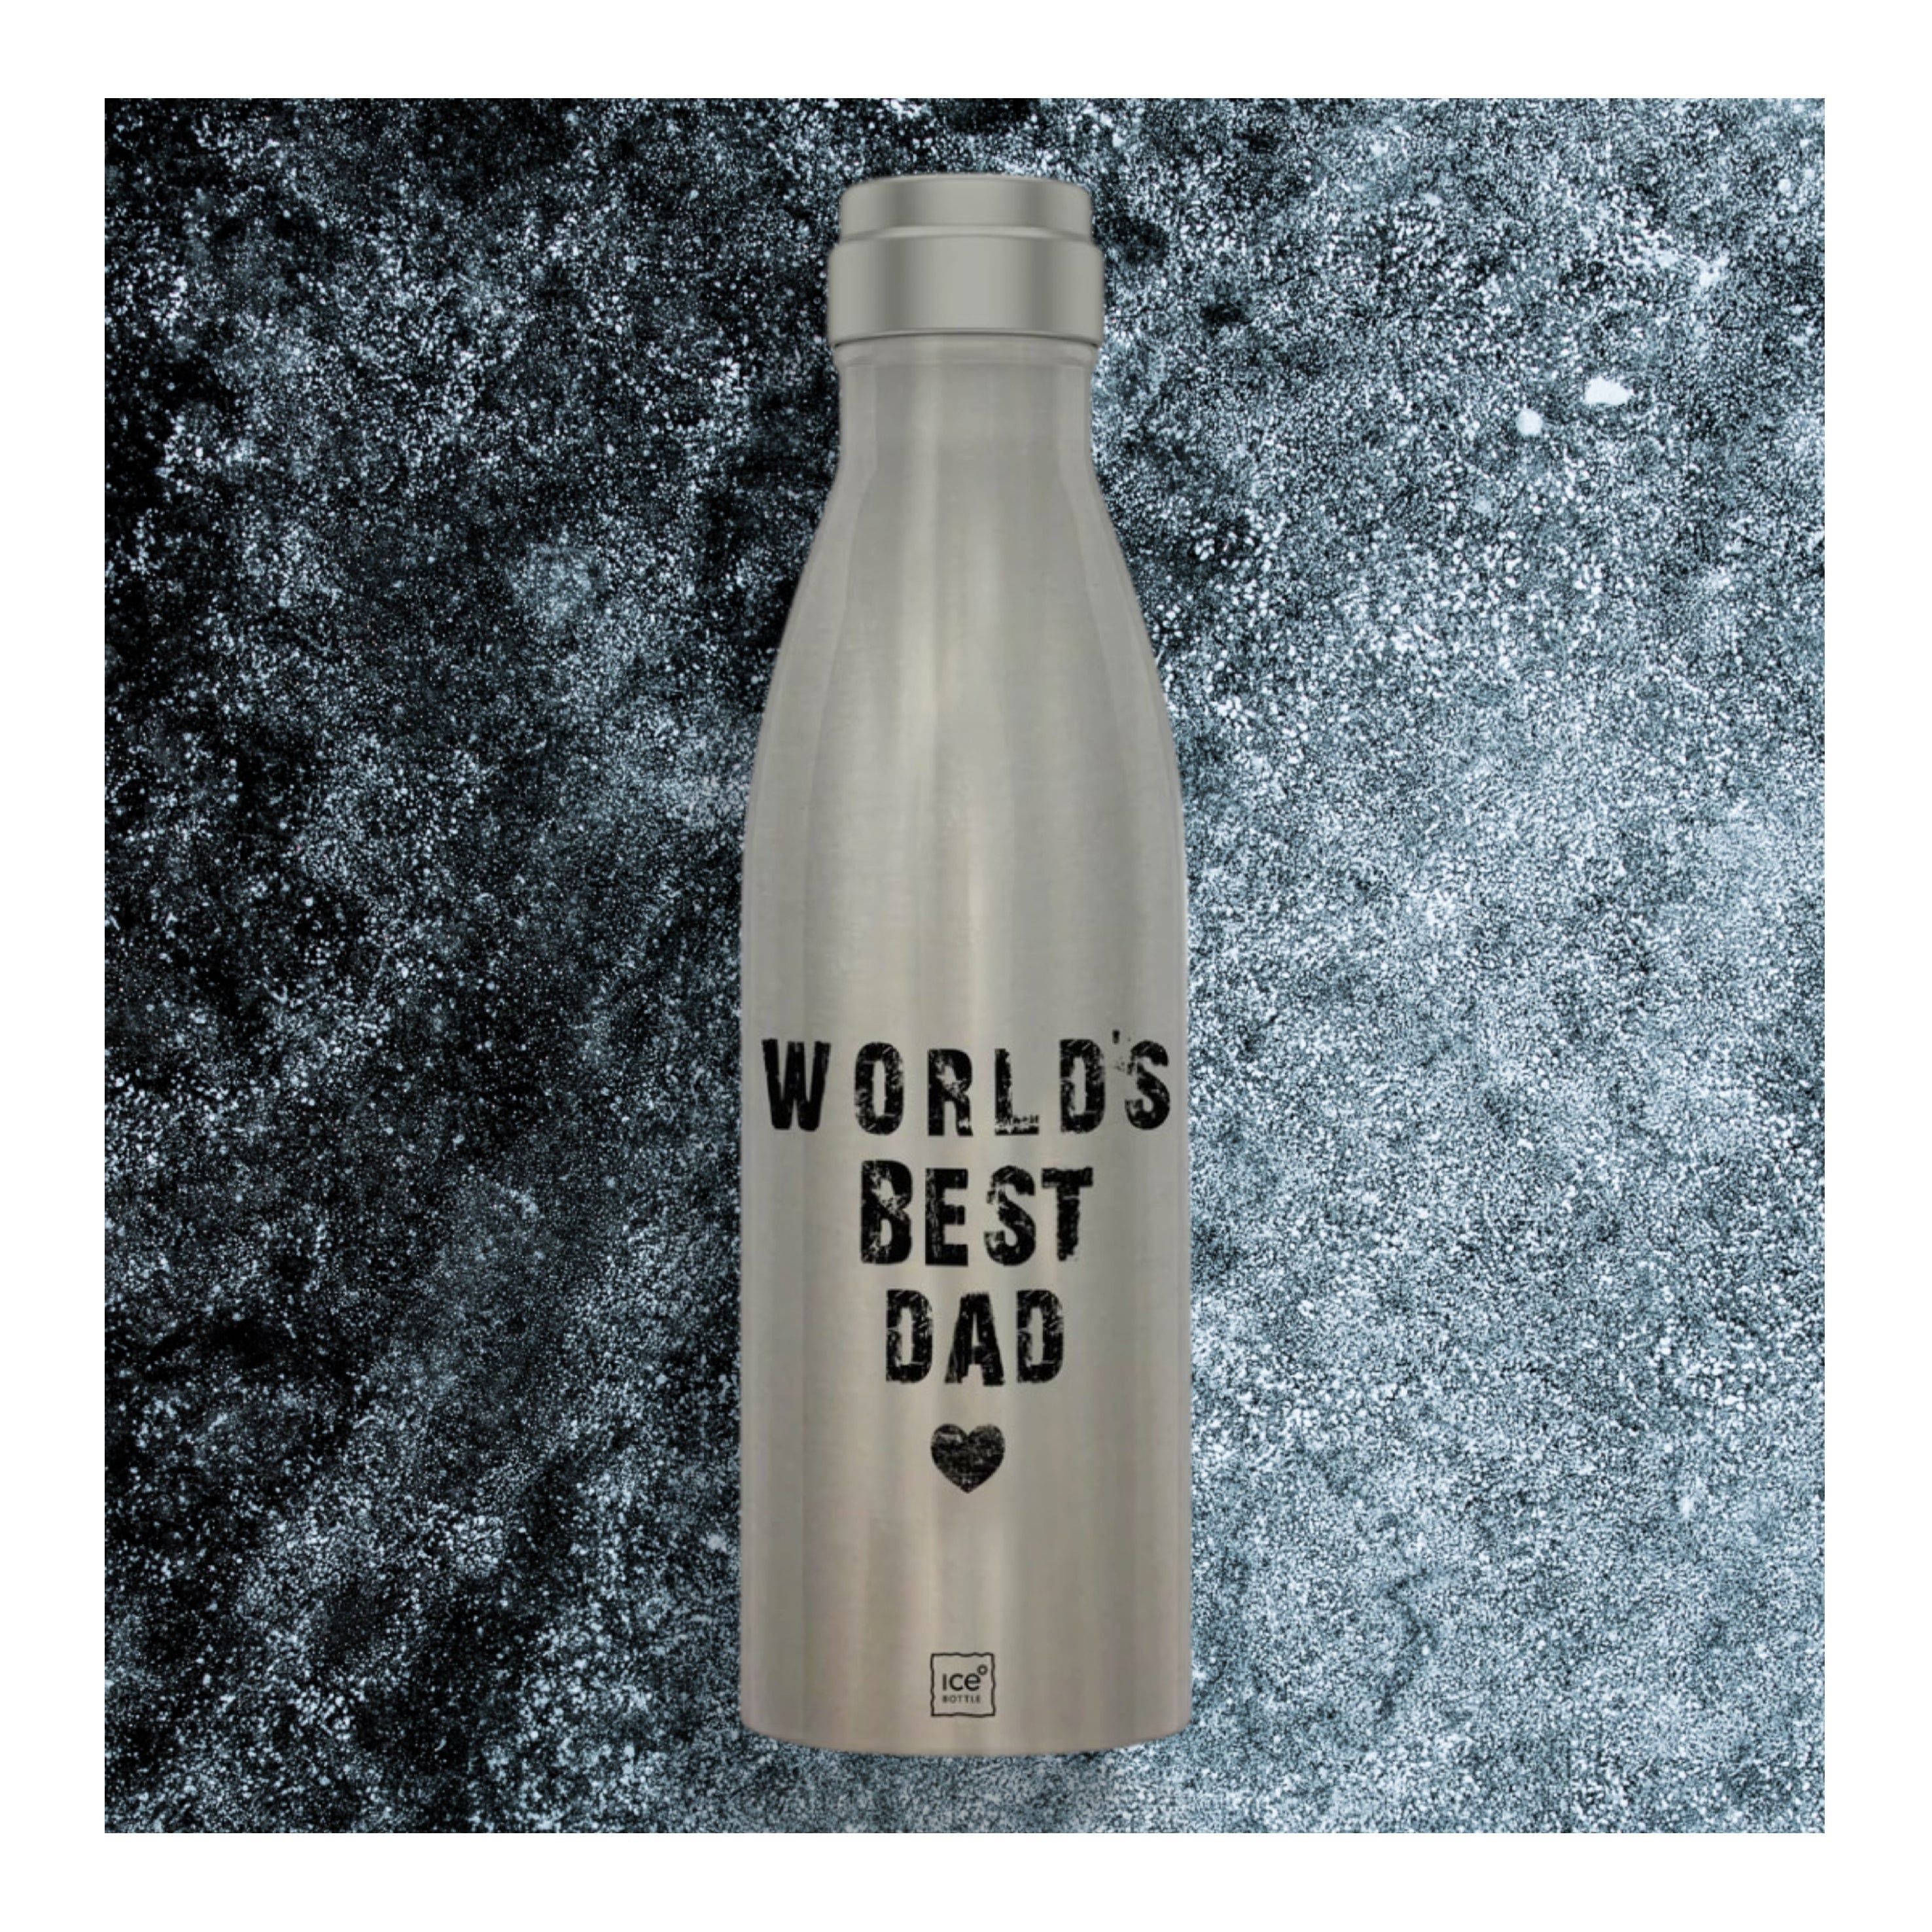 ICE° Bottle - Worlds Best Dad - Stainless Steel Water Bottle